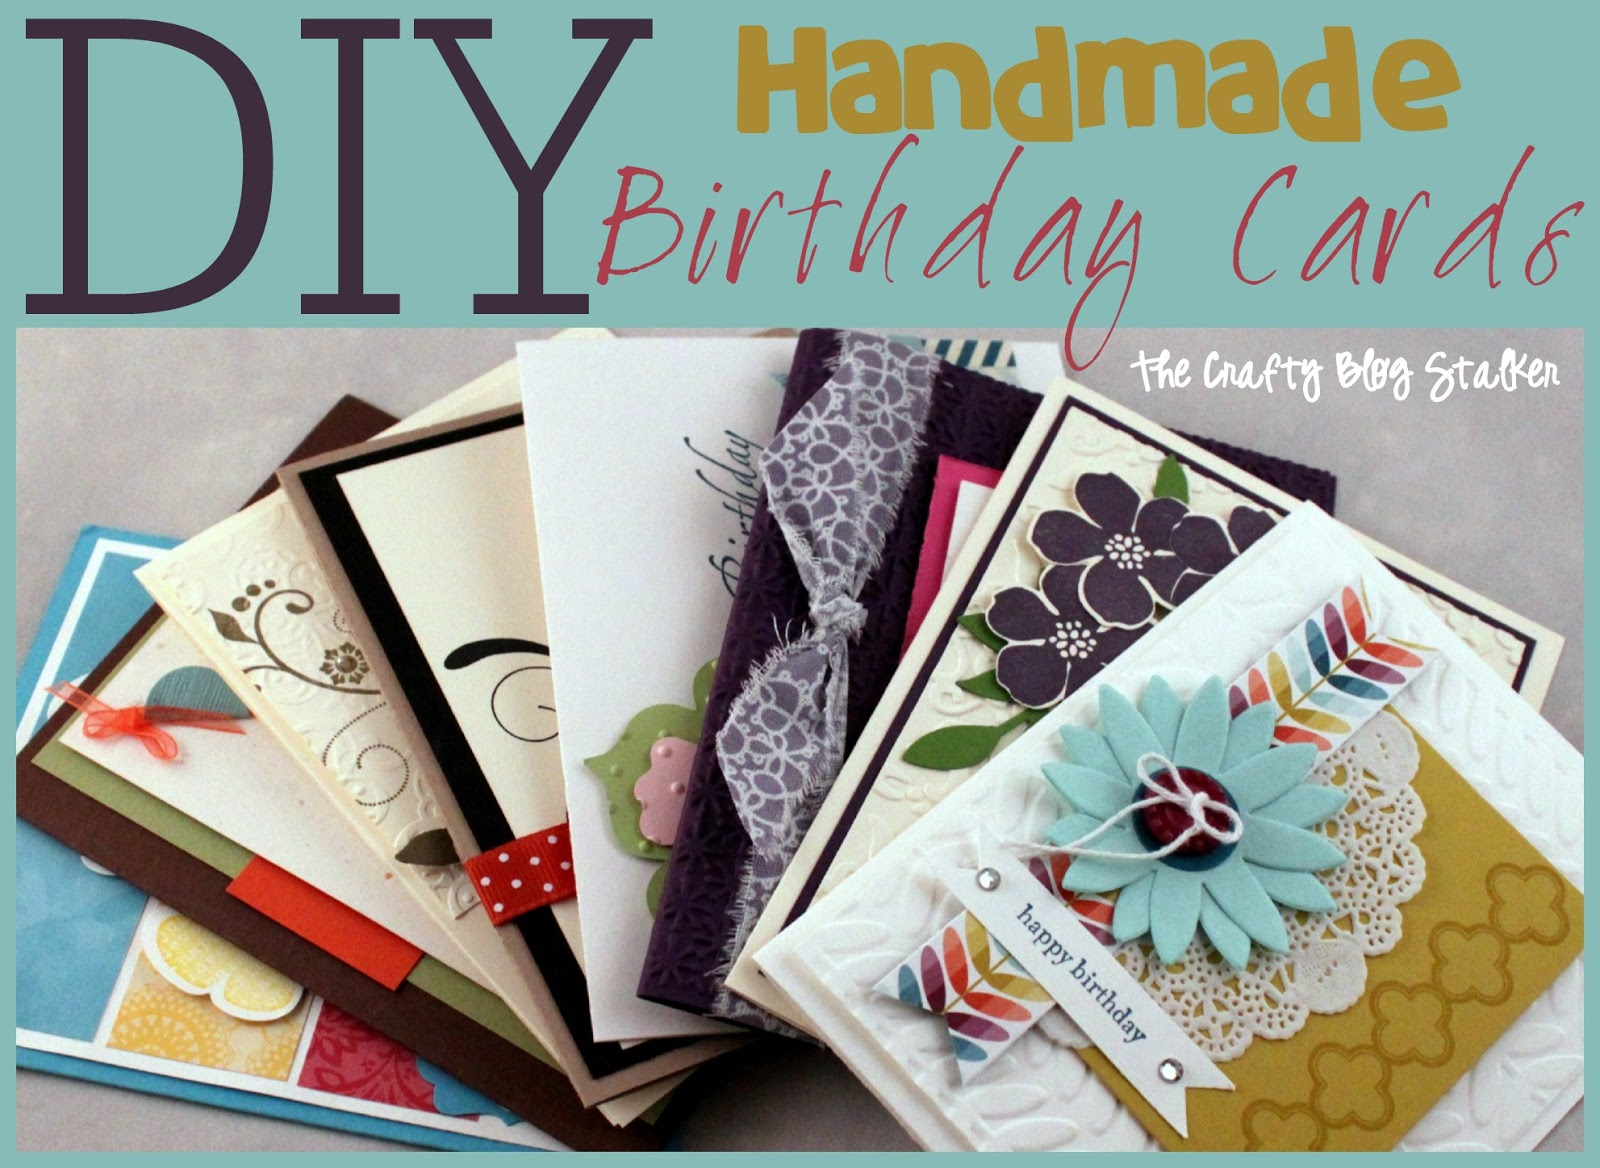 Birthday Card Ideas Handmade Handmade Birthday Card Ideas The Crafty Blog Stalker